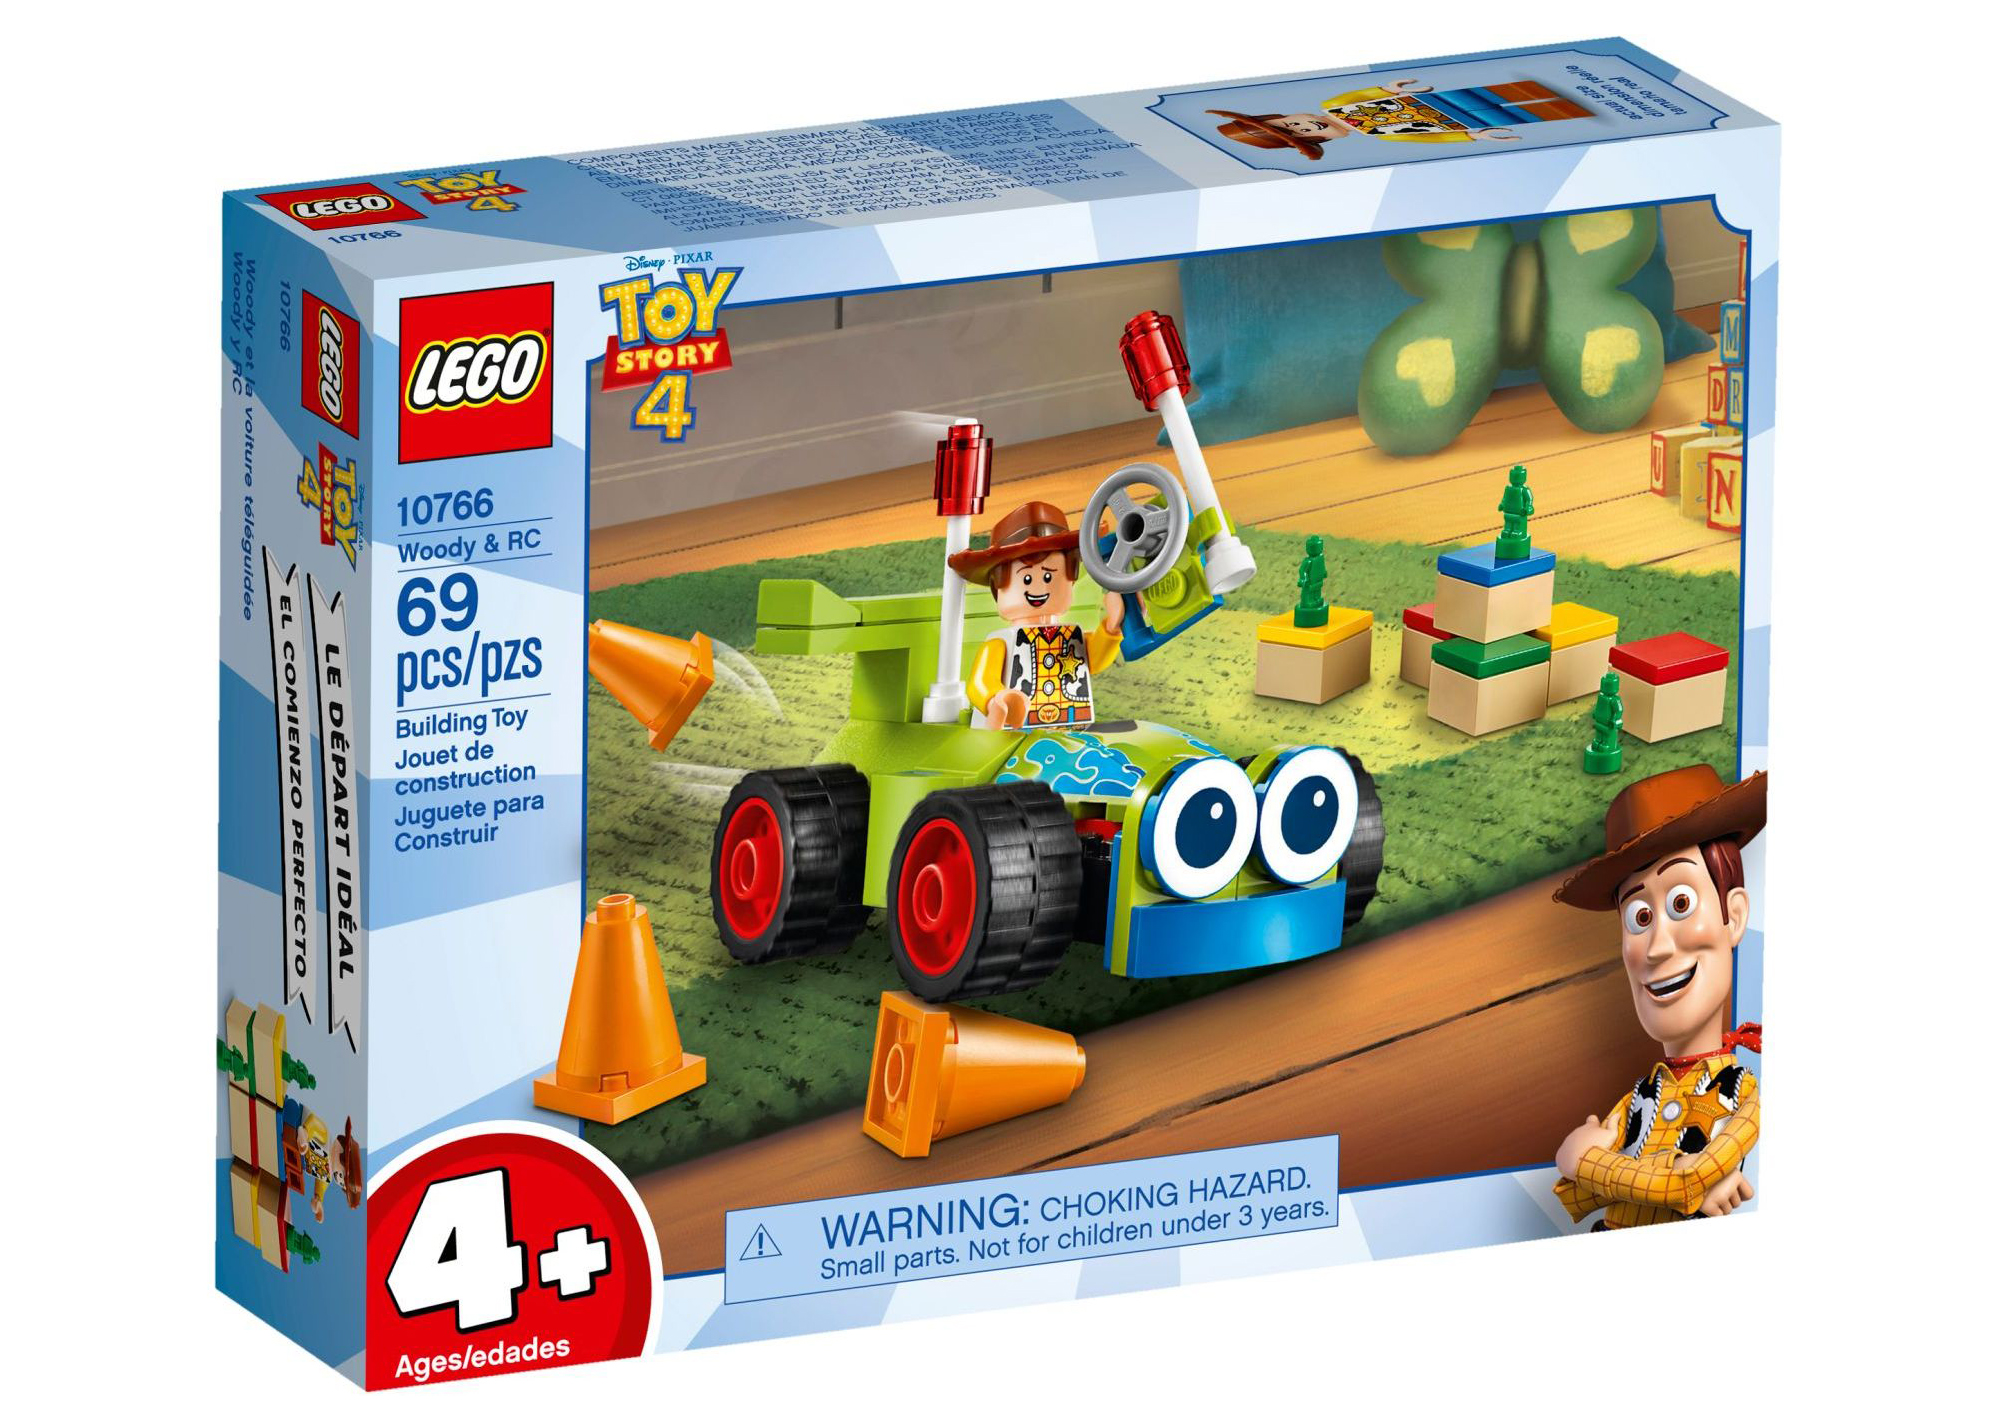 LEGO Disney Story 4 Woody & RC Set 10766 - US